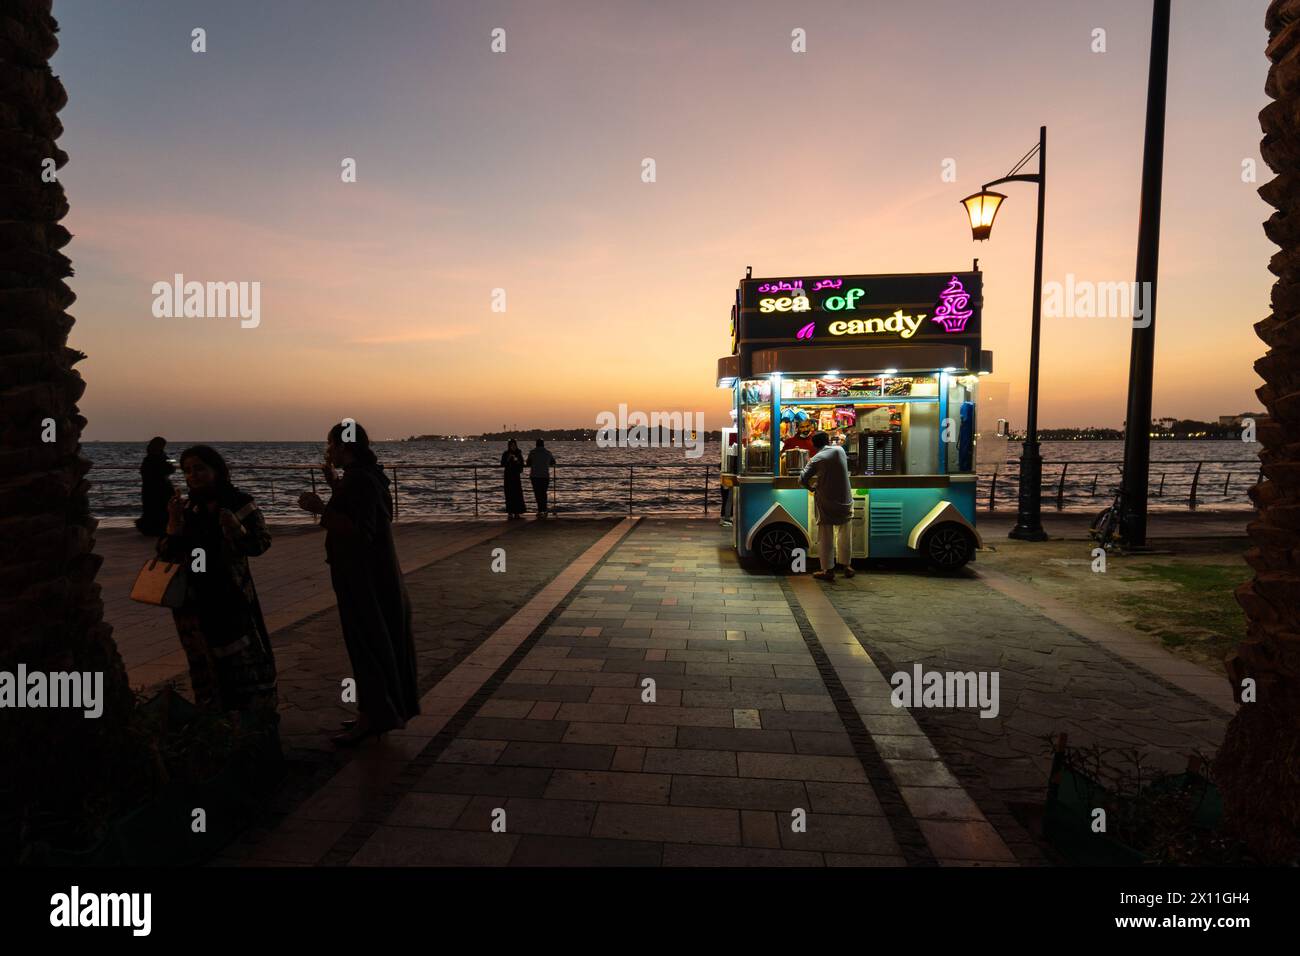 Jeddah, Saudi Arabia - January 30 2023: People enjoy the twilight at the Al-Hamra Corniche with a candy stall by the red sea in Saudi Arabia. Stock Photo